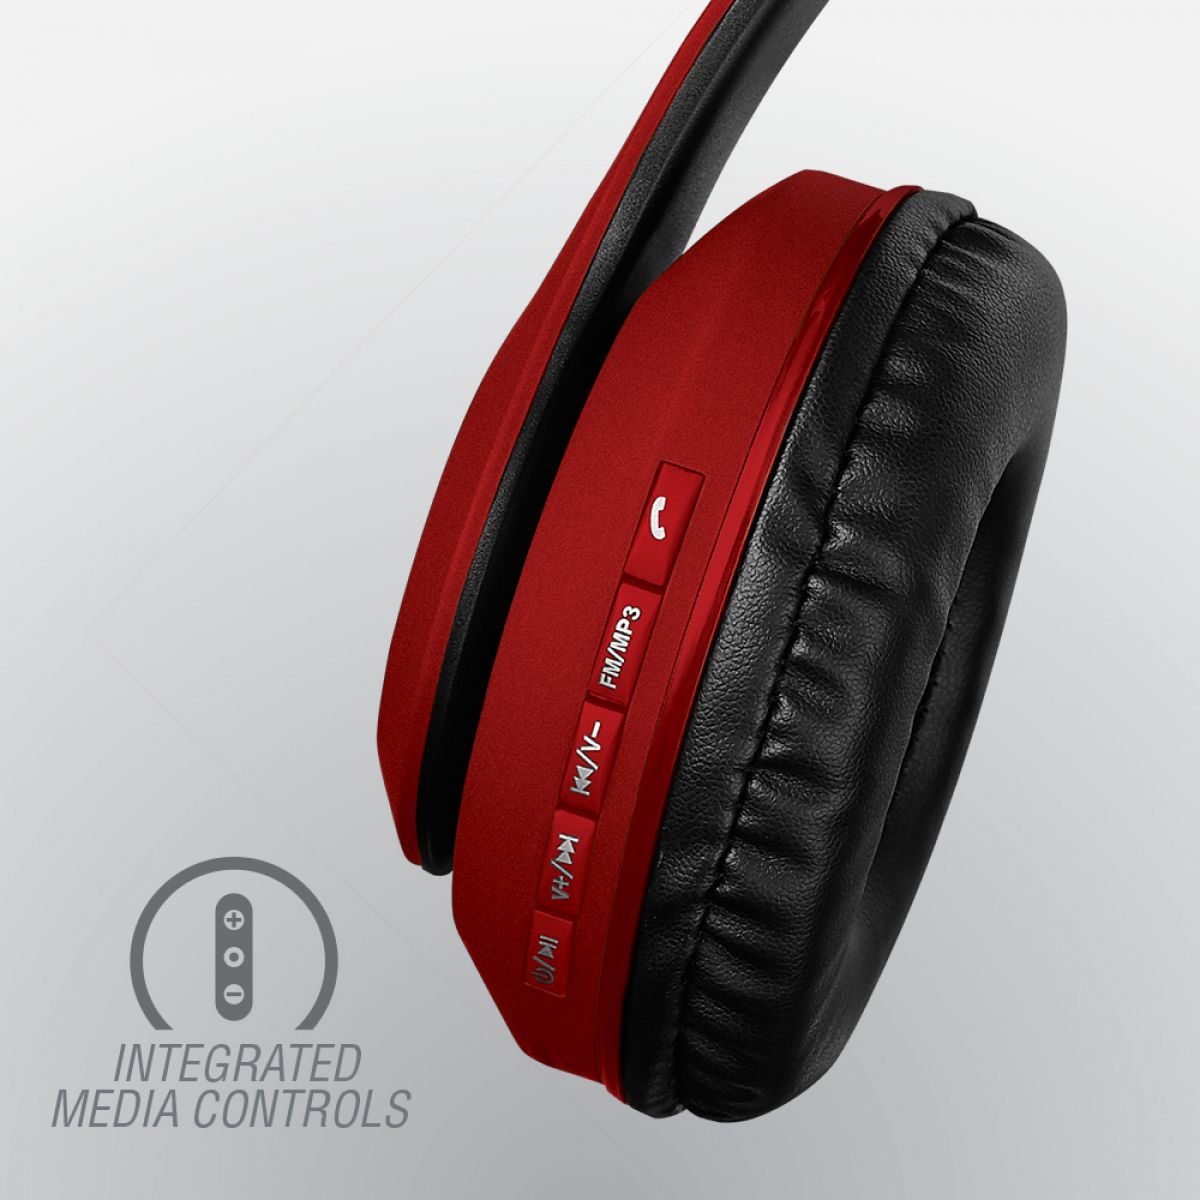 Volkano Wireless Bluetooth Headphones - Impulse Series - Red